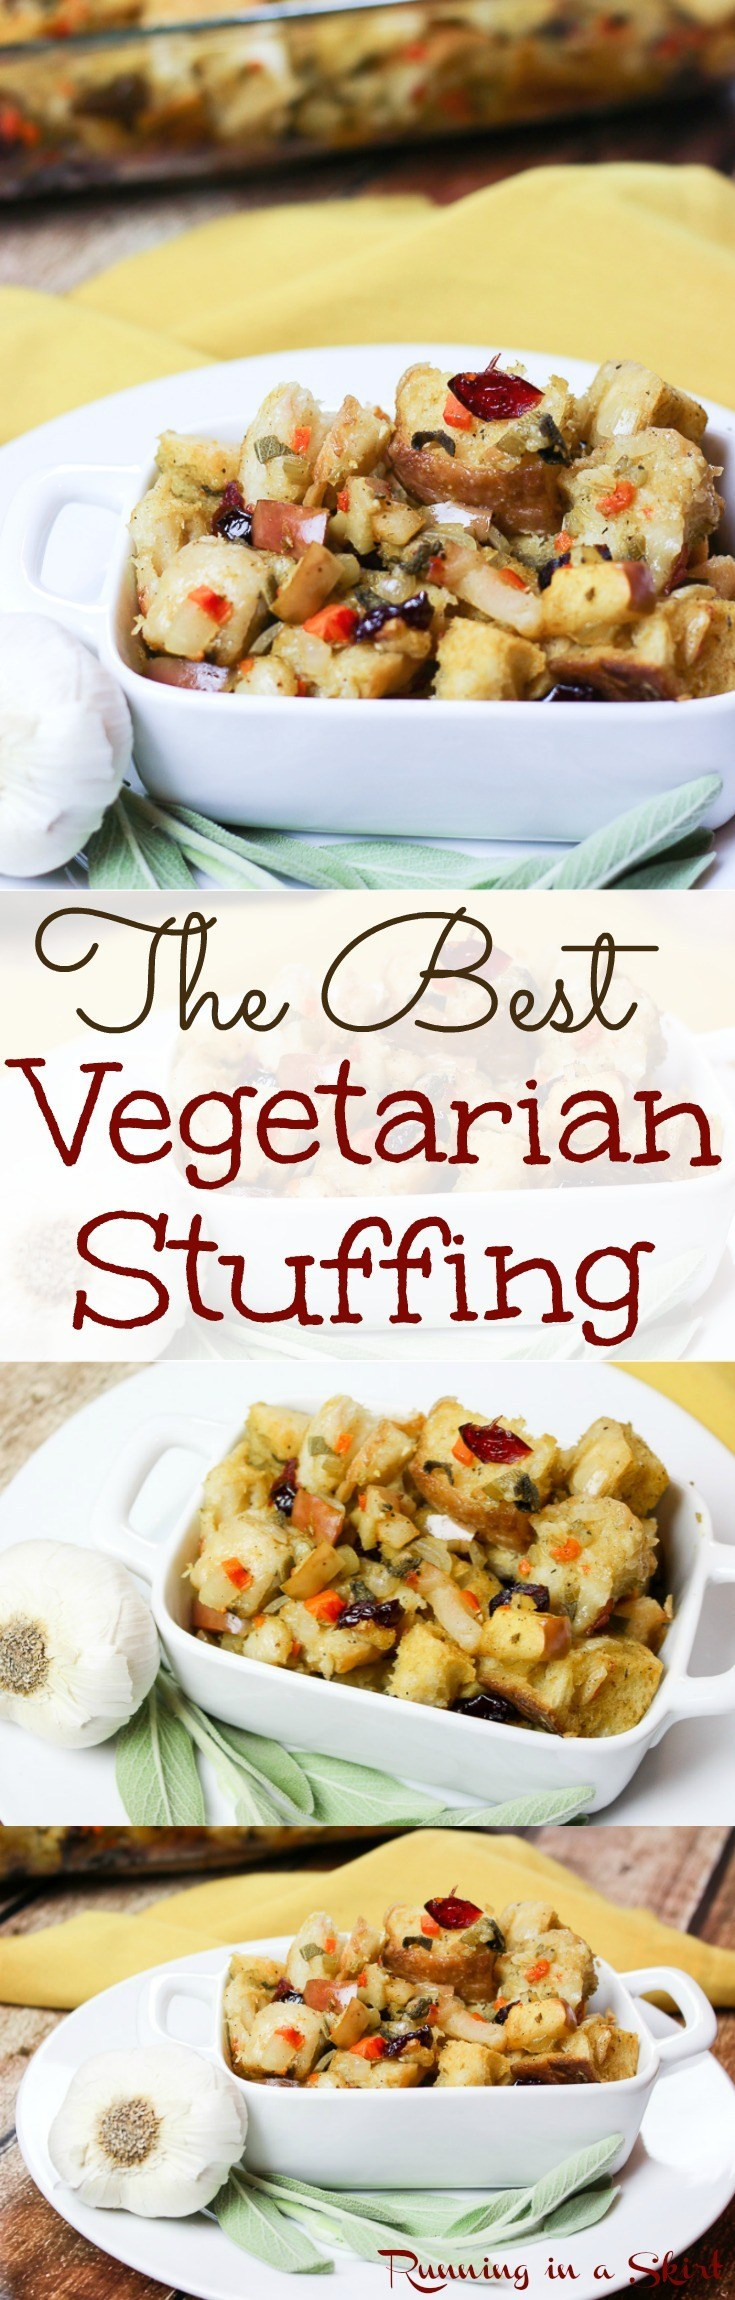 Vegetarian Thanksgiving Stuffing
 The Best Ve arian Stuffing Recipe